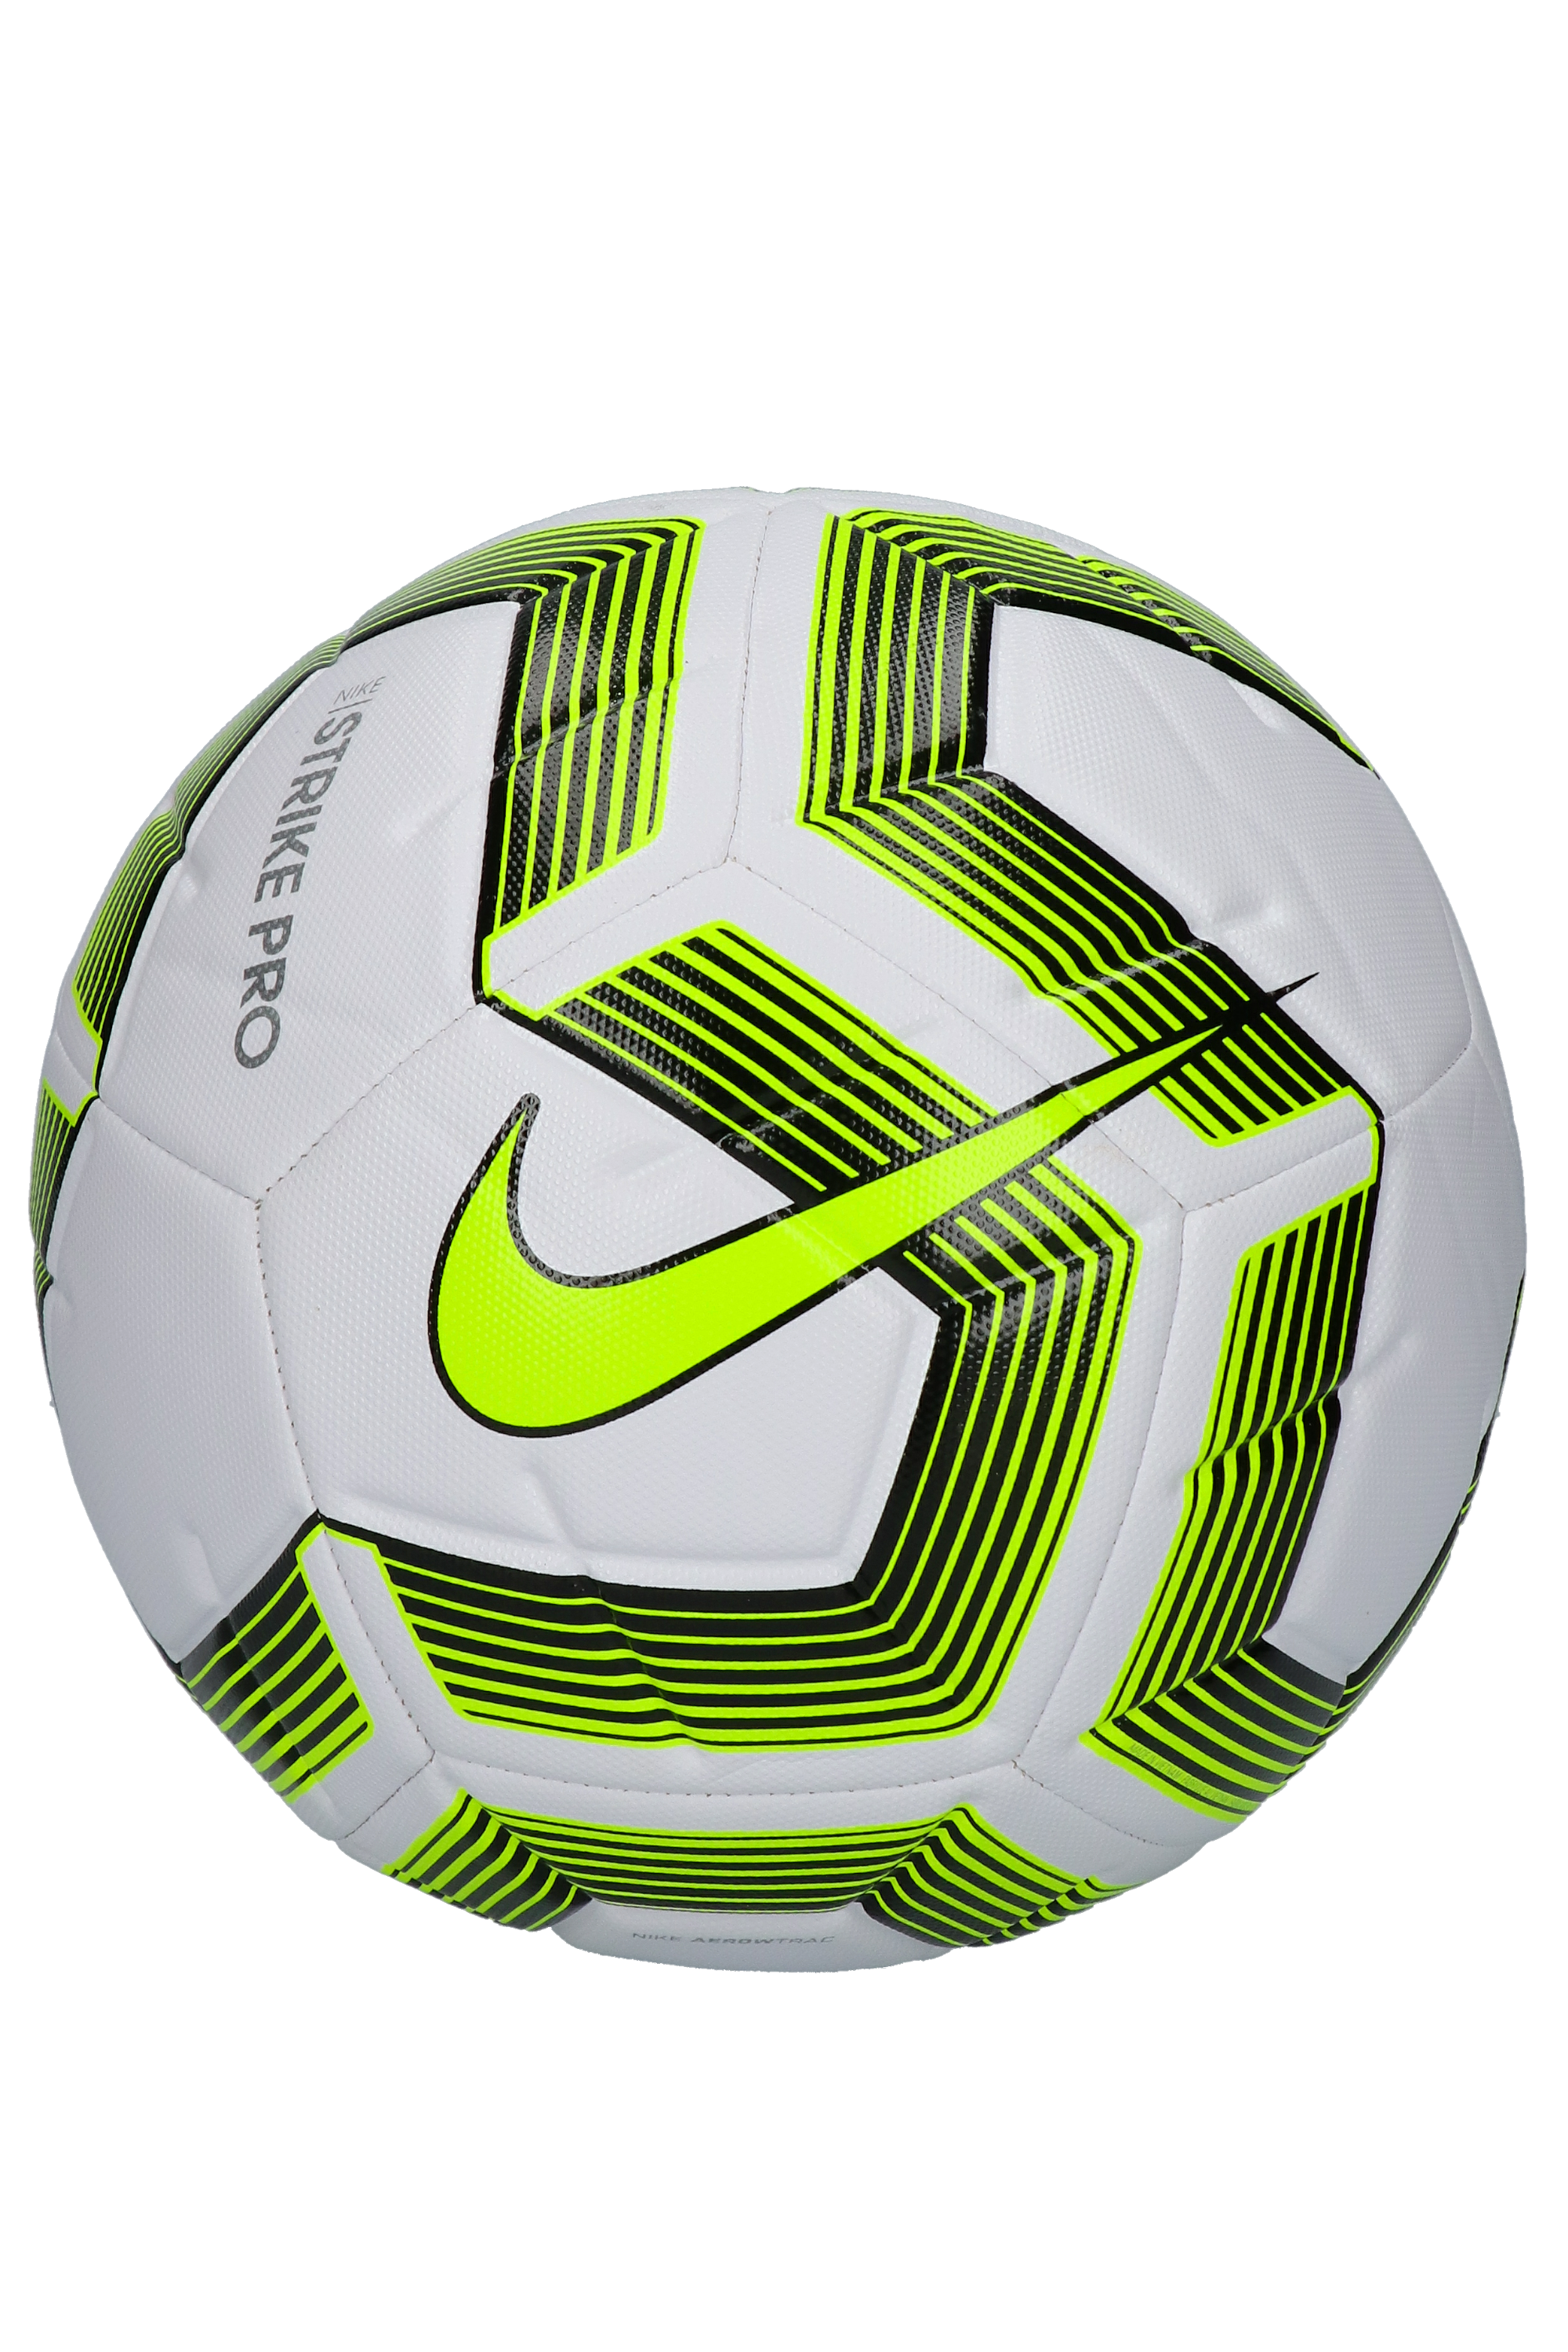 Ball Nike Strike Pro Team Ball size 4 | R-GOL.com - Football boots \u0026  equipment